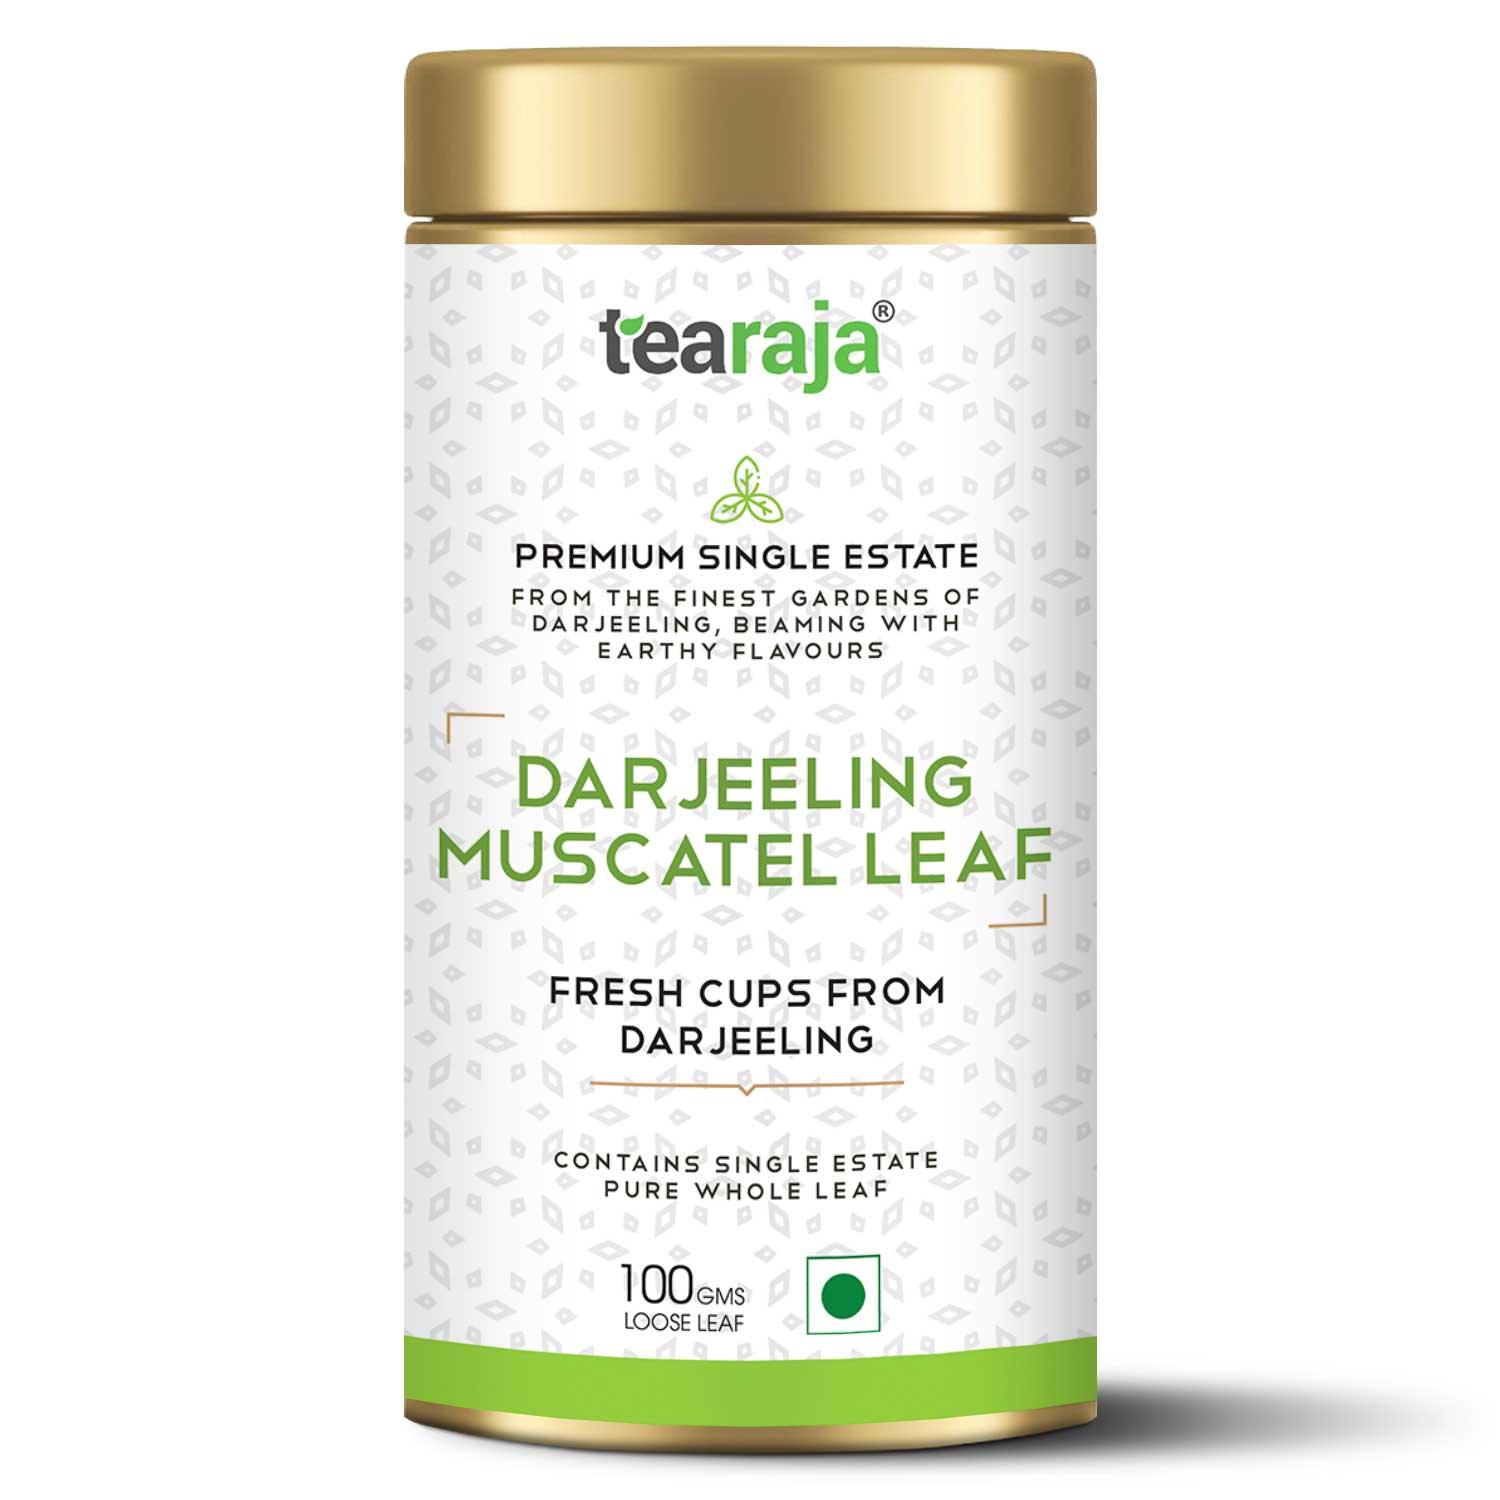 Darjeeling Muscatel Leaf - Tearaja